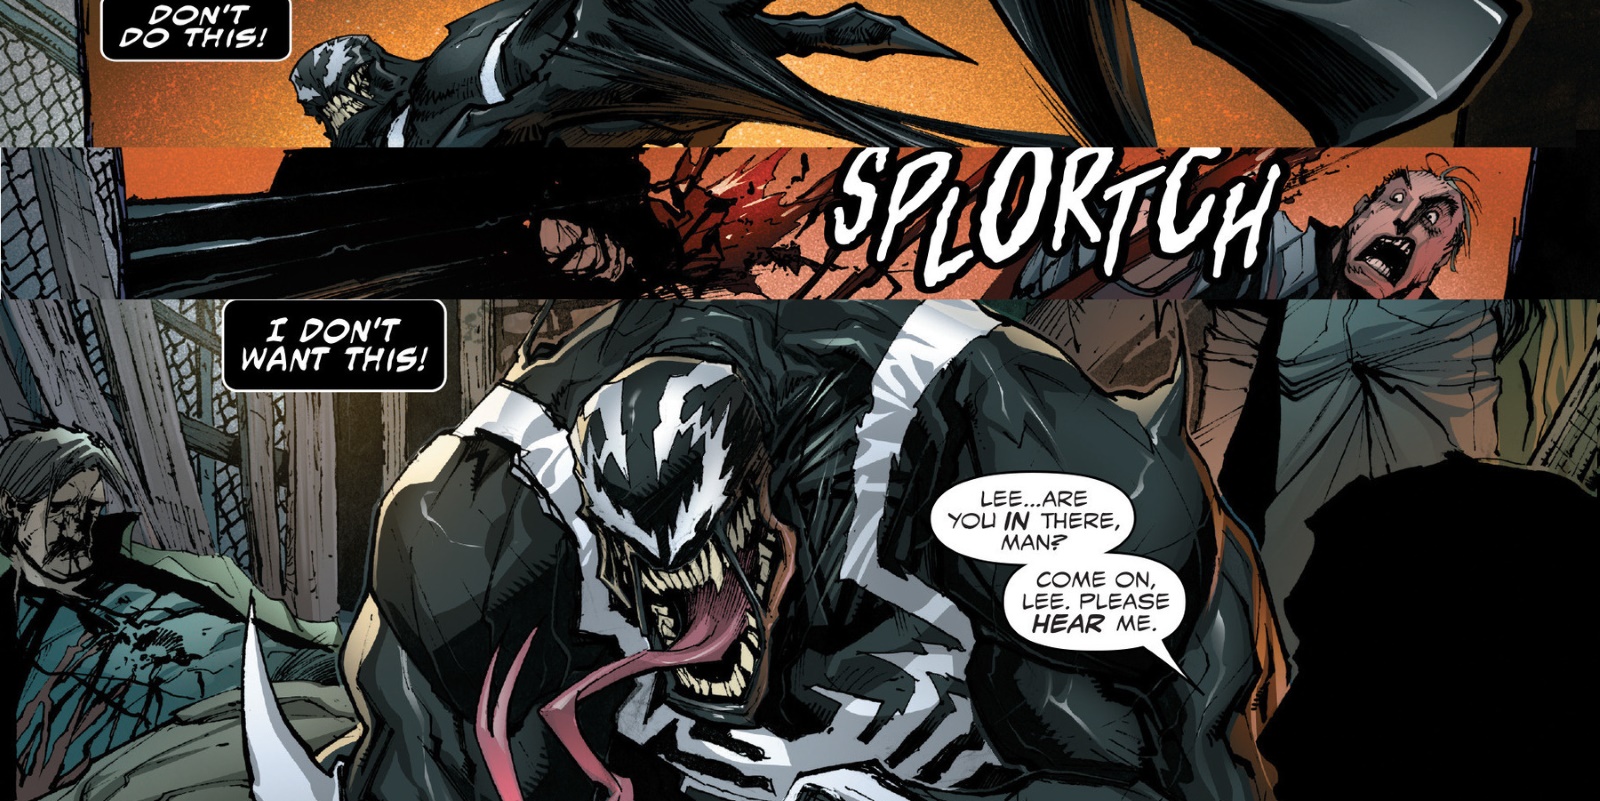 Marvel's Spider-Man 2: Who is Venom?